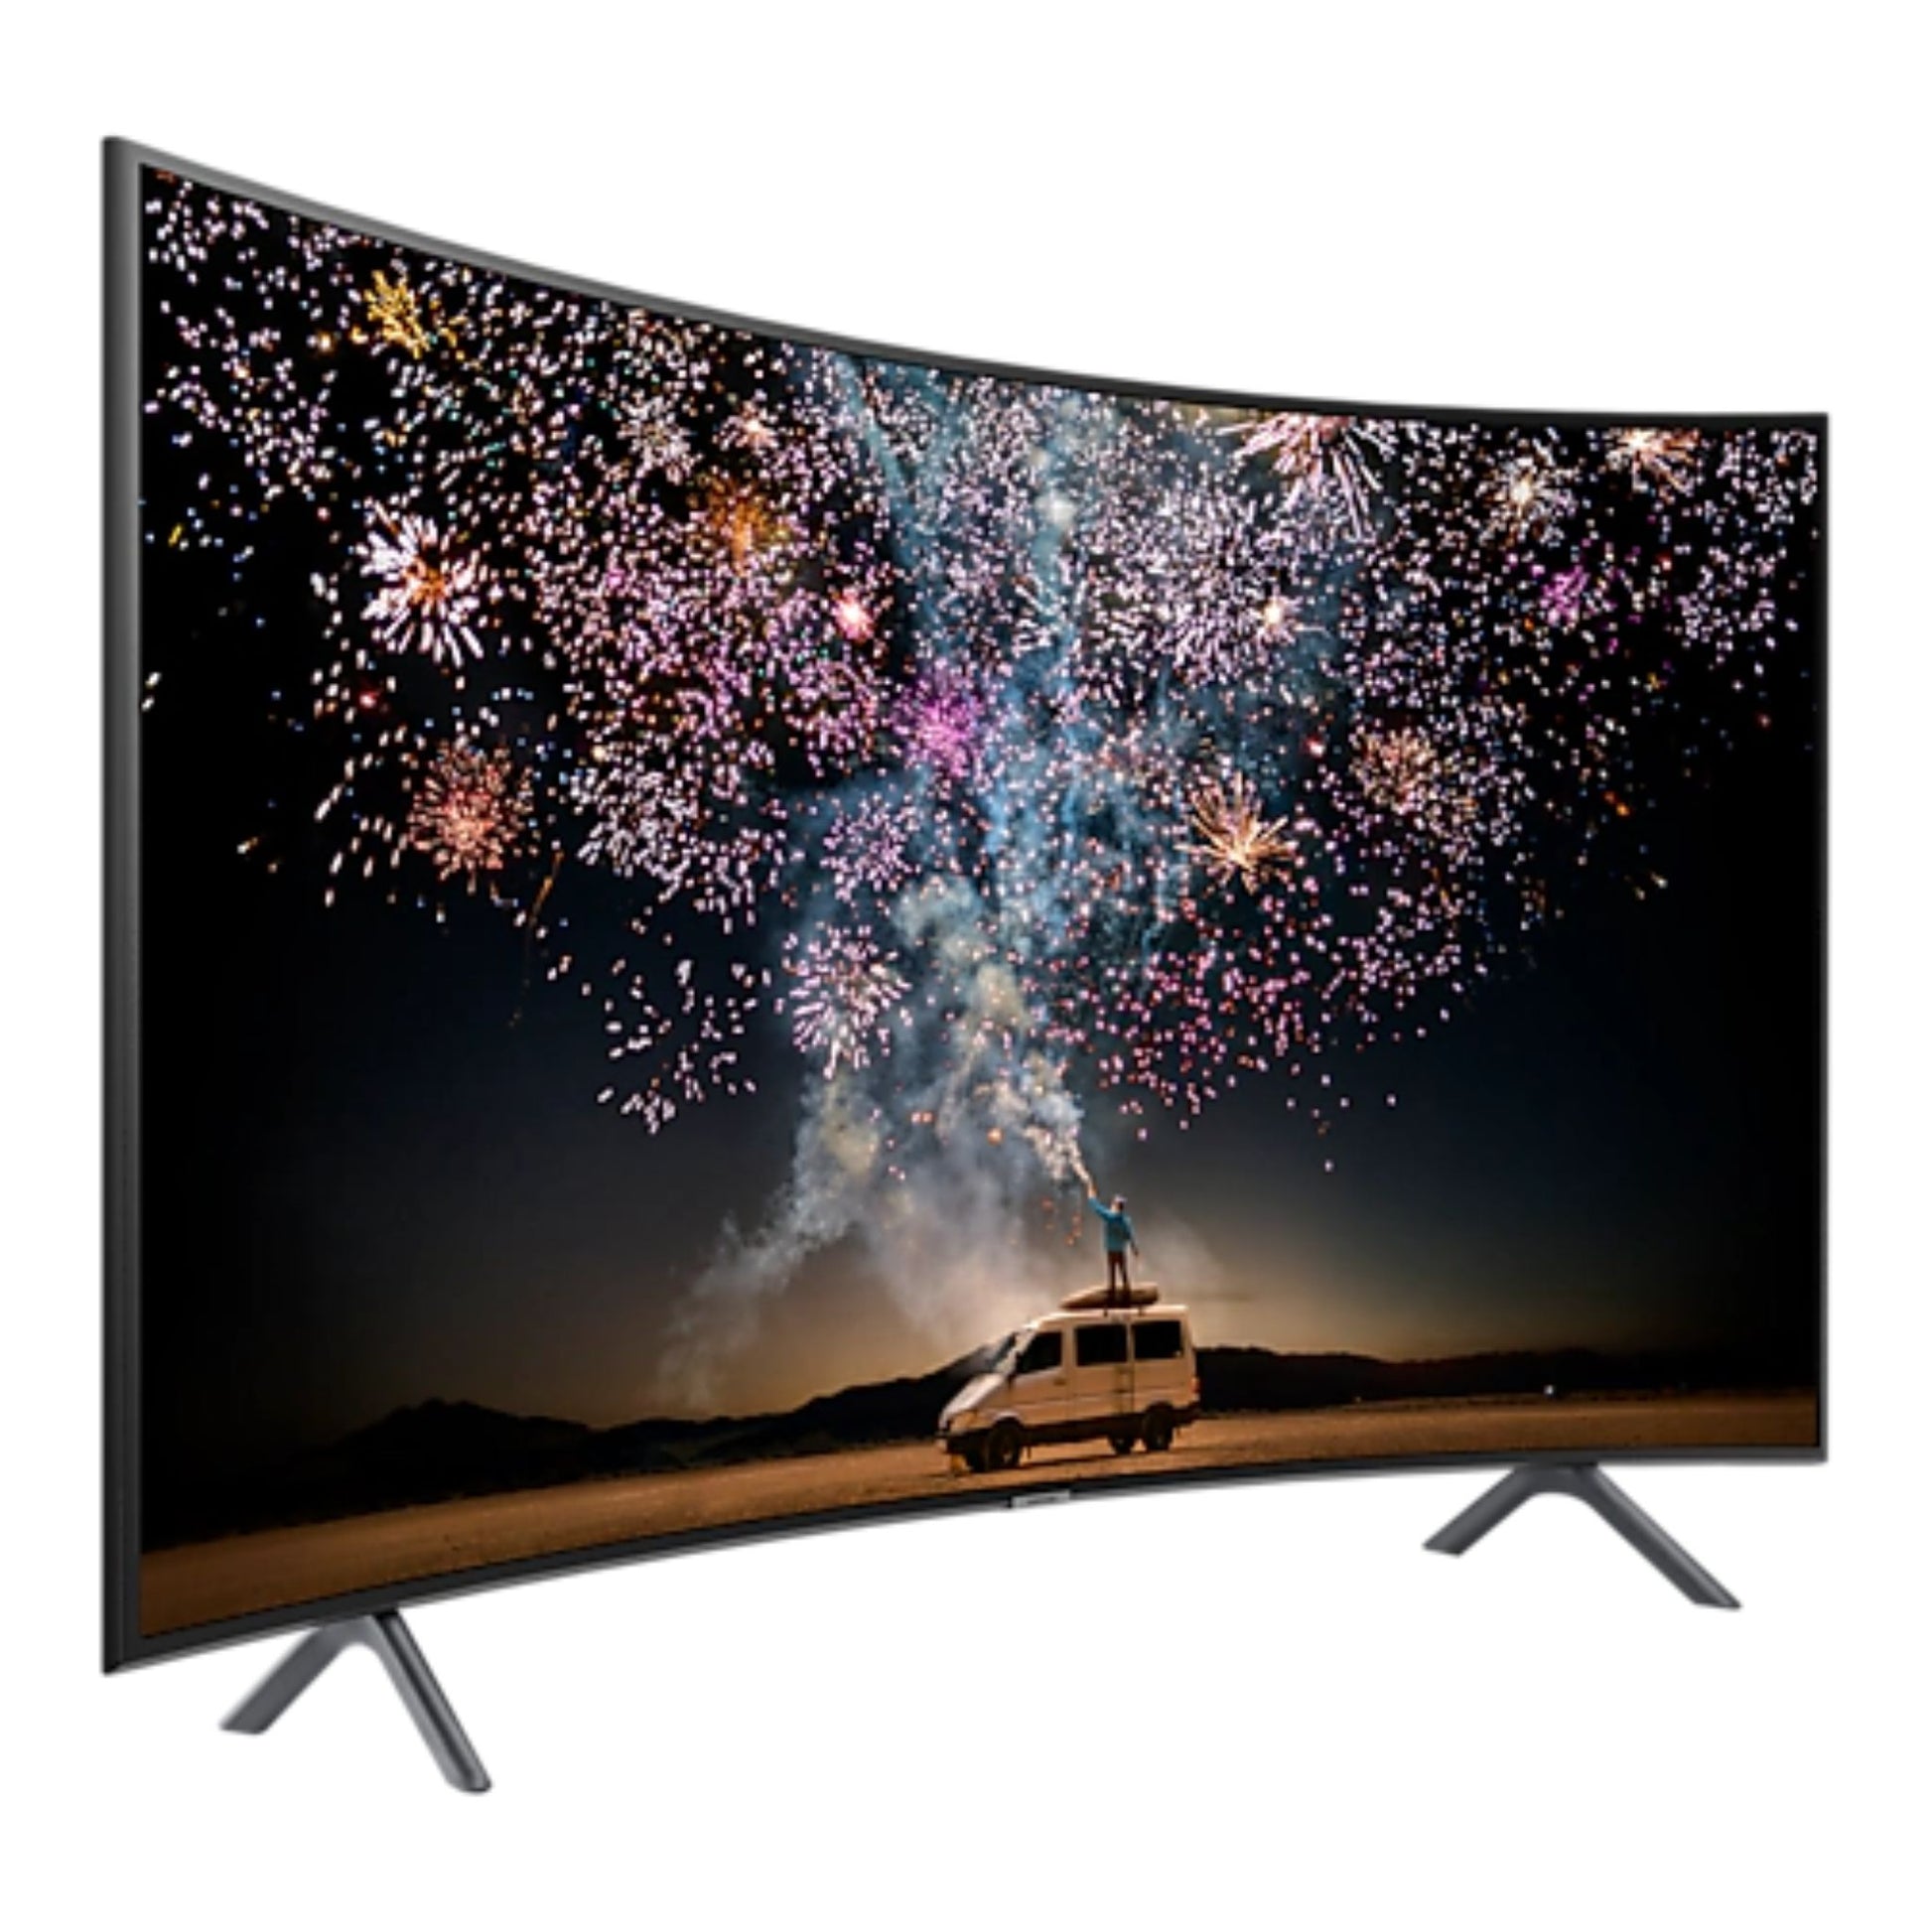 Samsung 49 inch Curved Smart TV, 49TU8300